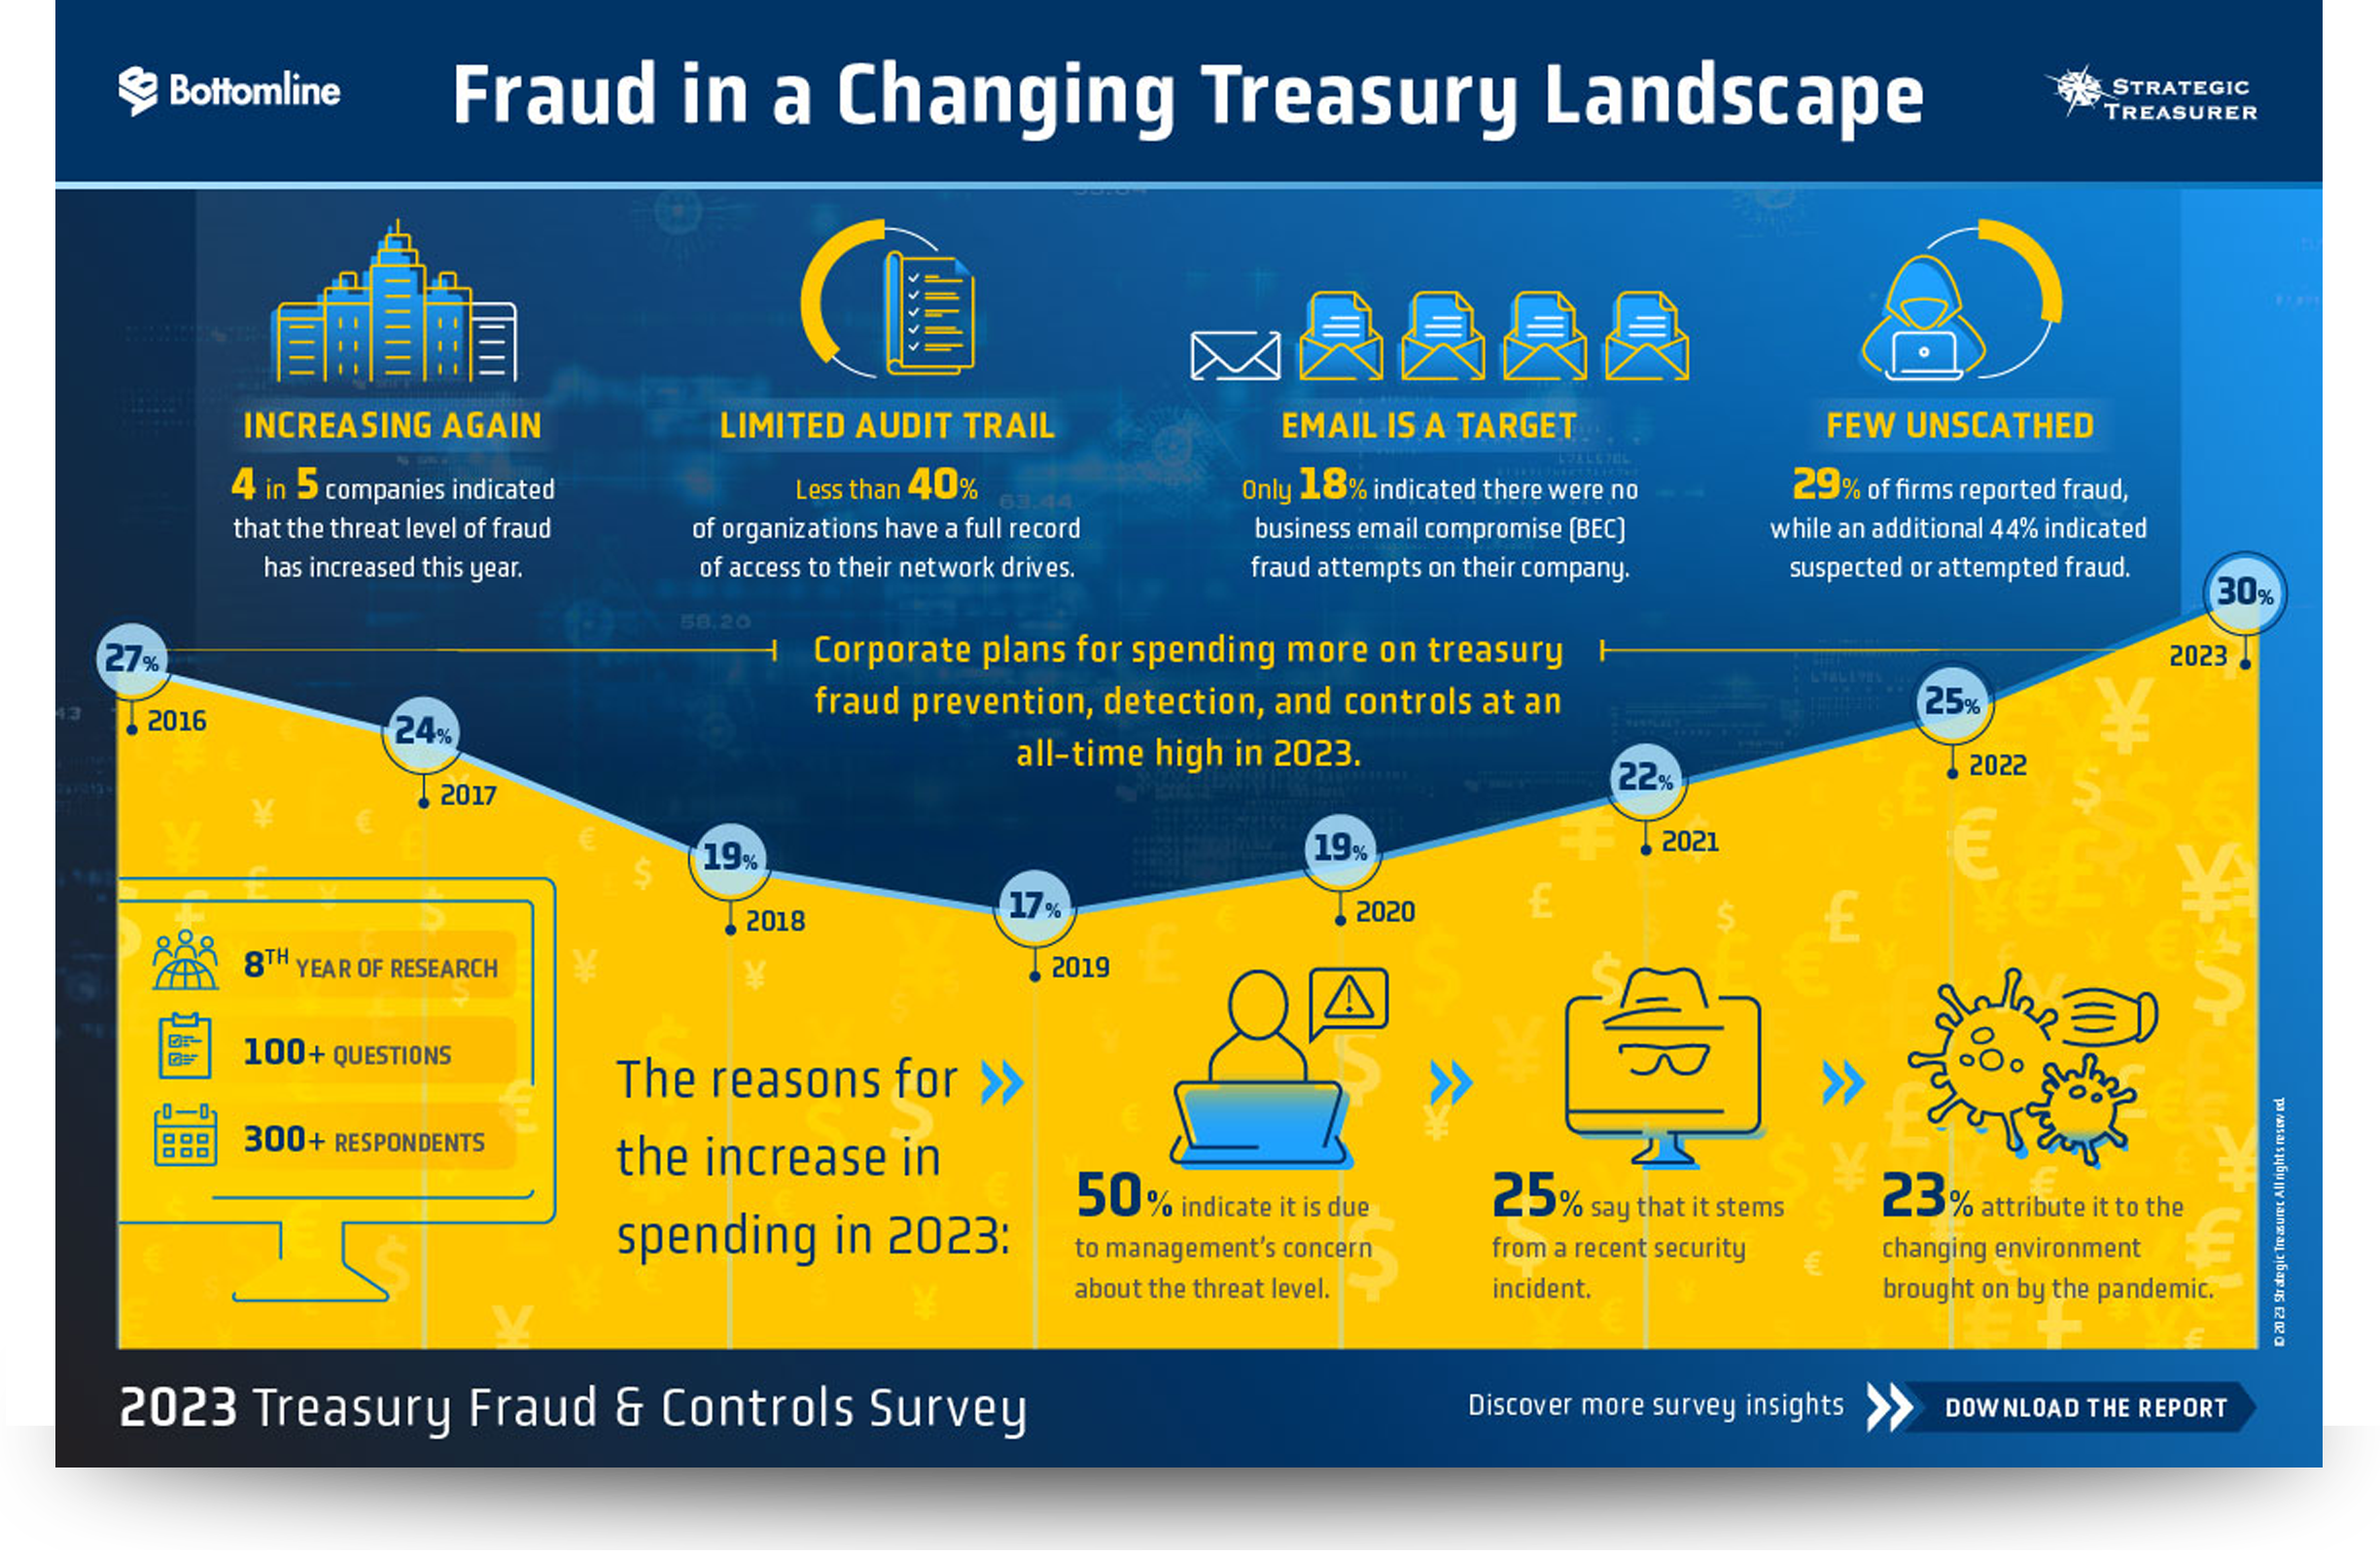 2023 Treasury Fraud & Controls Survey Results Infographic